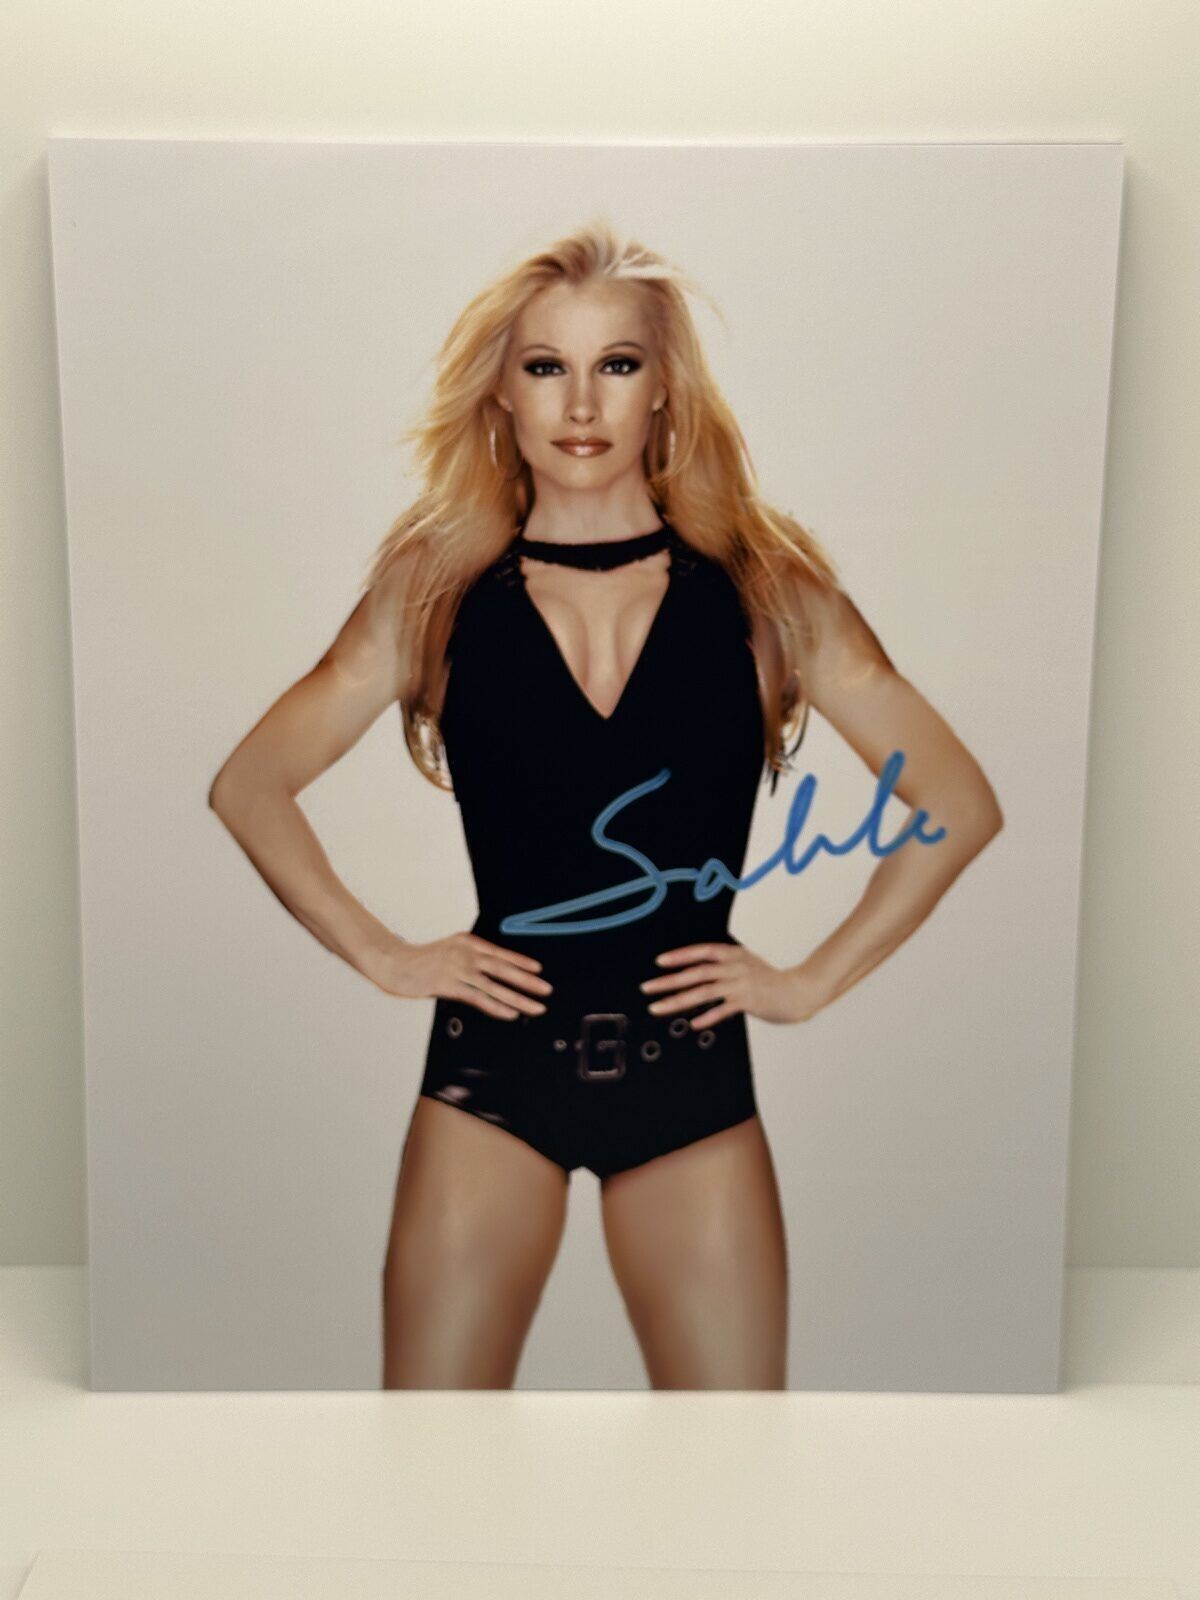 Sable WWE Signed Autographed Photo Authentic 8x10 COA